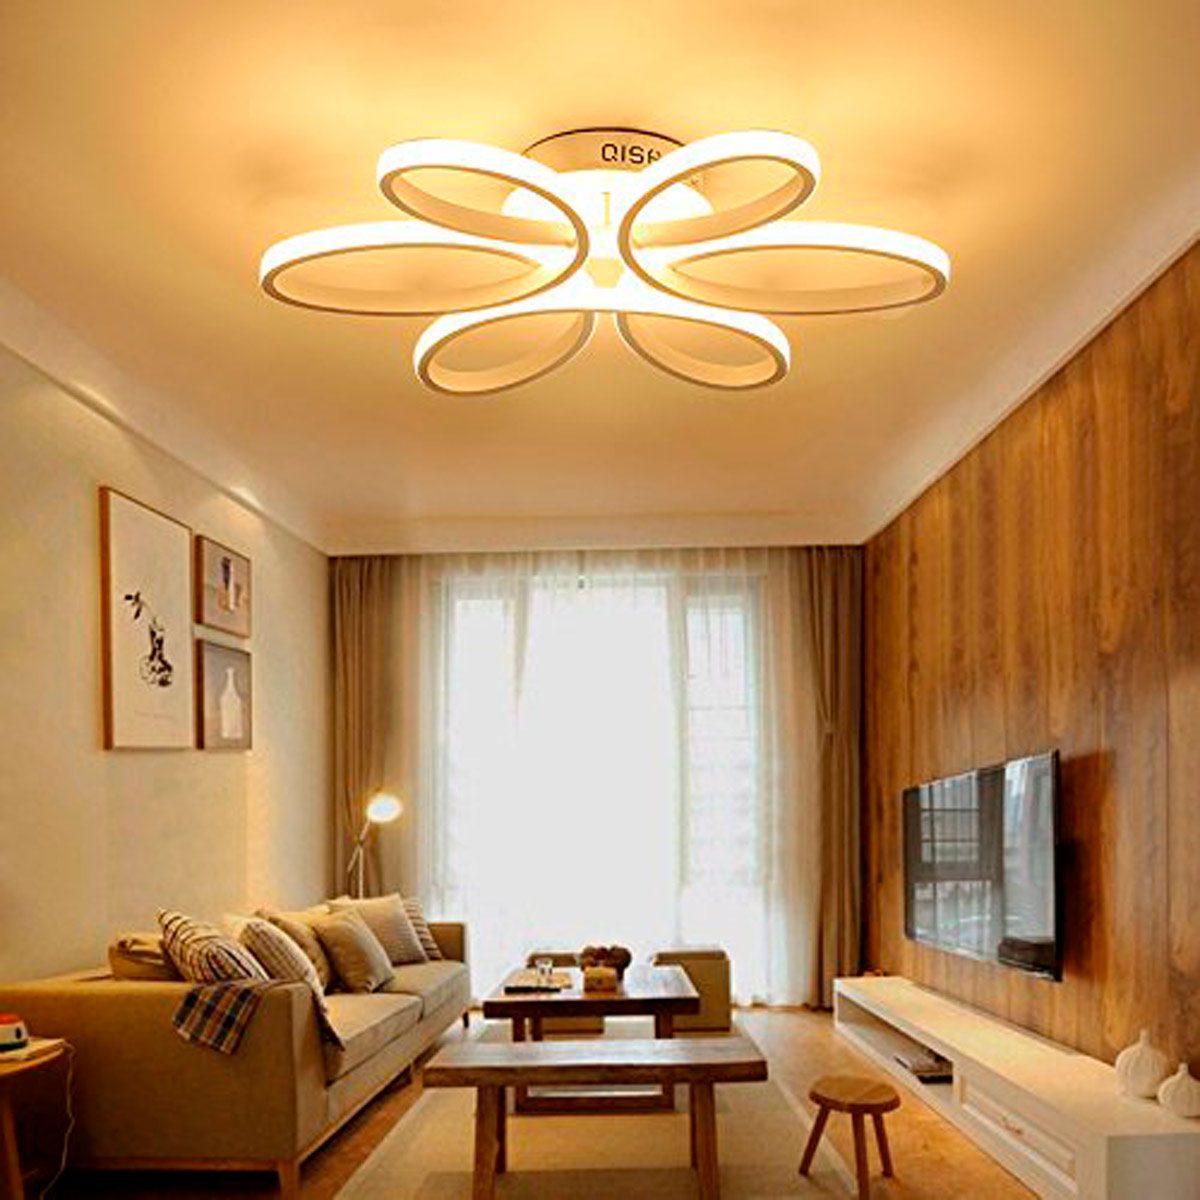 10 Living Room Lighting Ideas We Love | Family Handyman